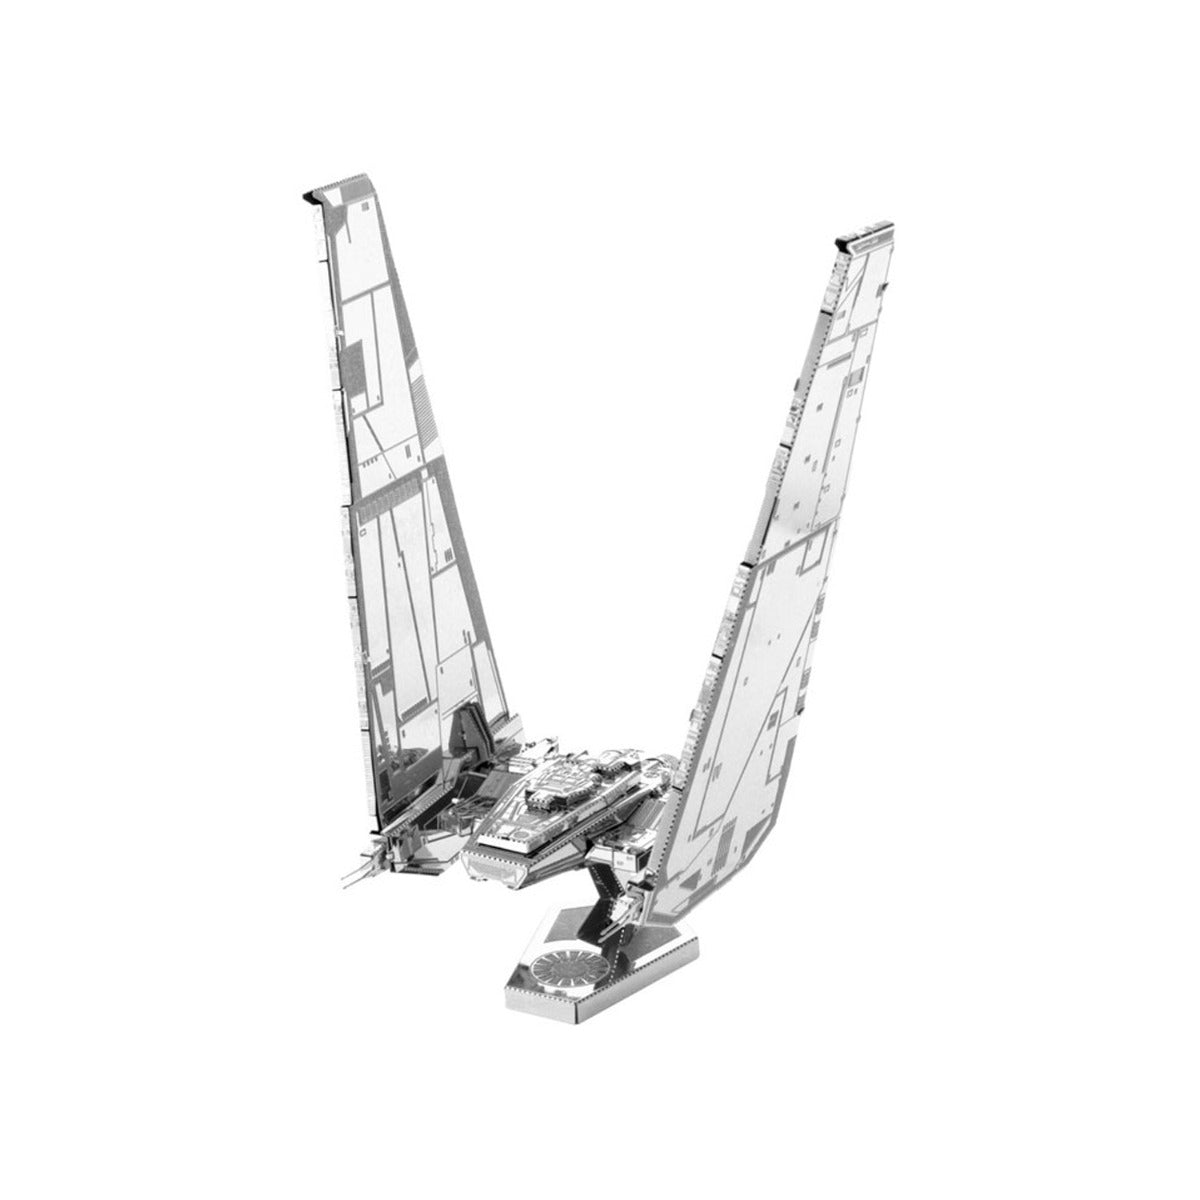 Metal Earth STAR WARS EP 7 Kylo Rens Command Shuttle MMS266 3D Figur Metallbausatz